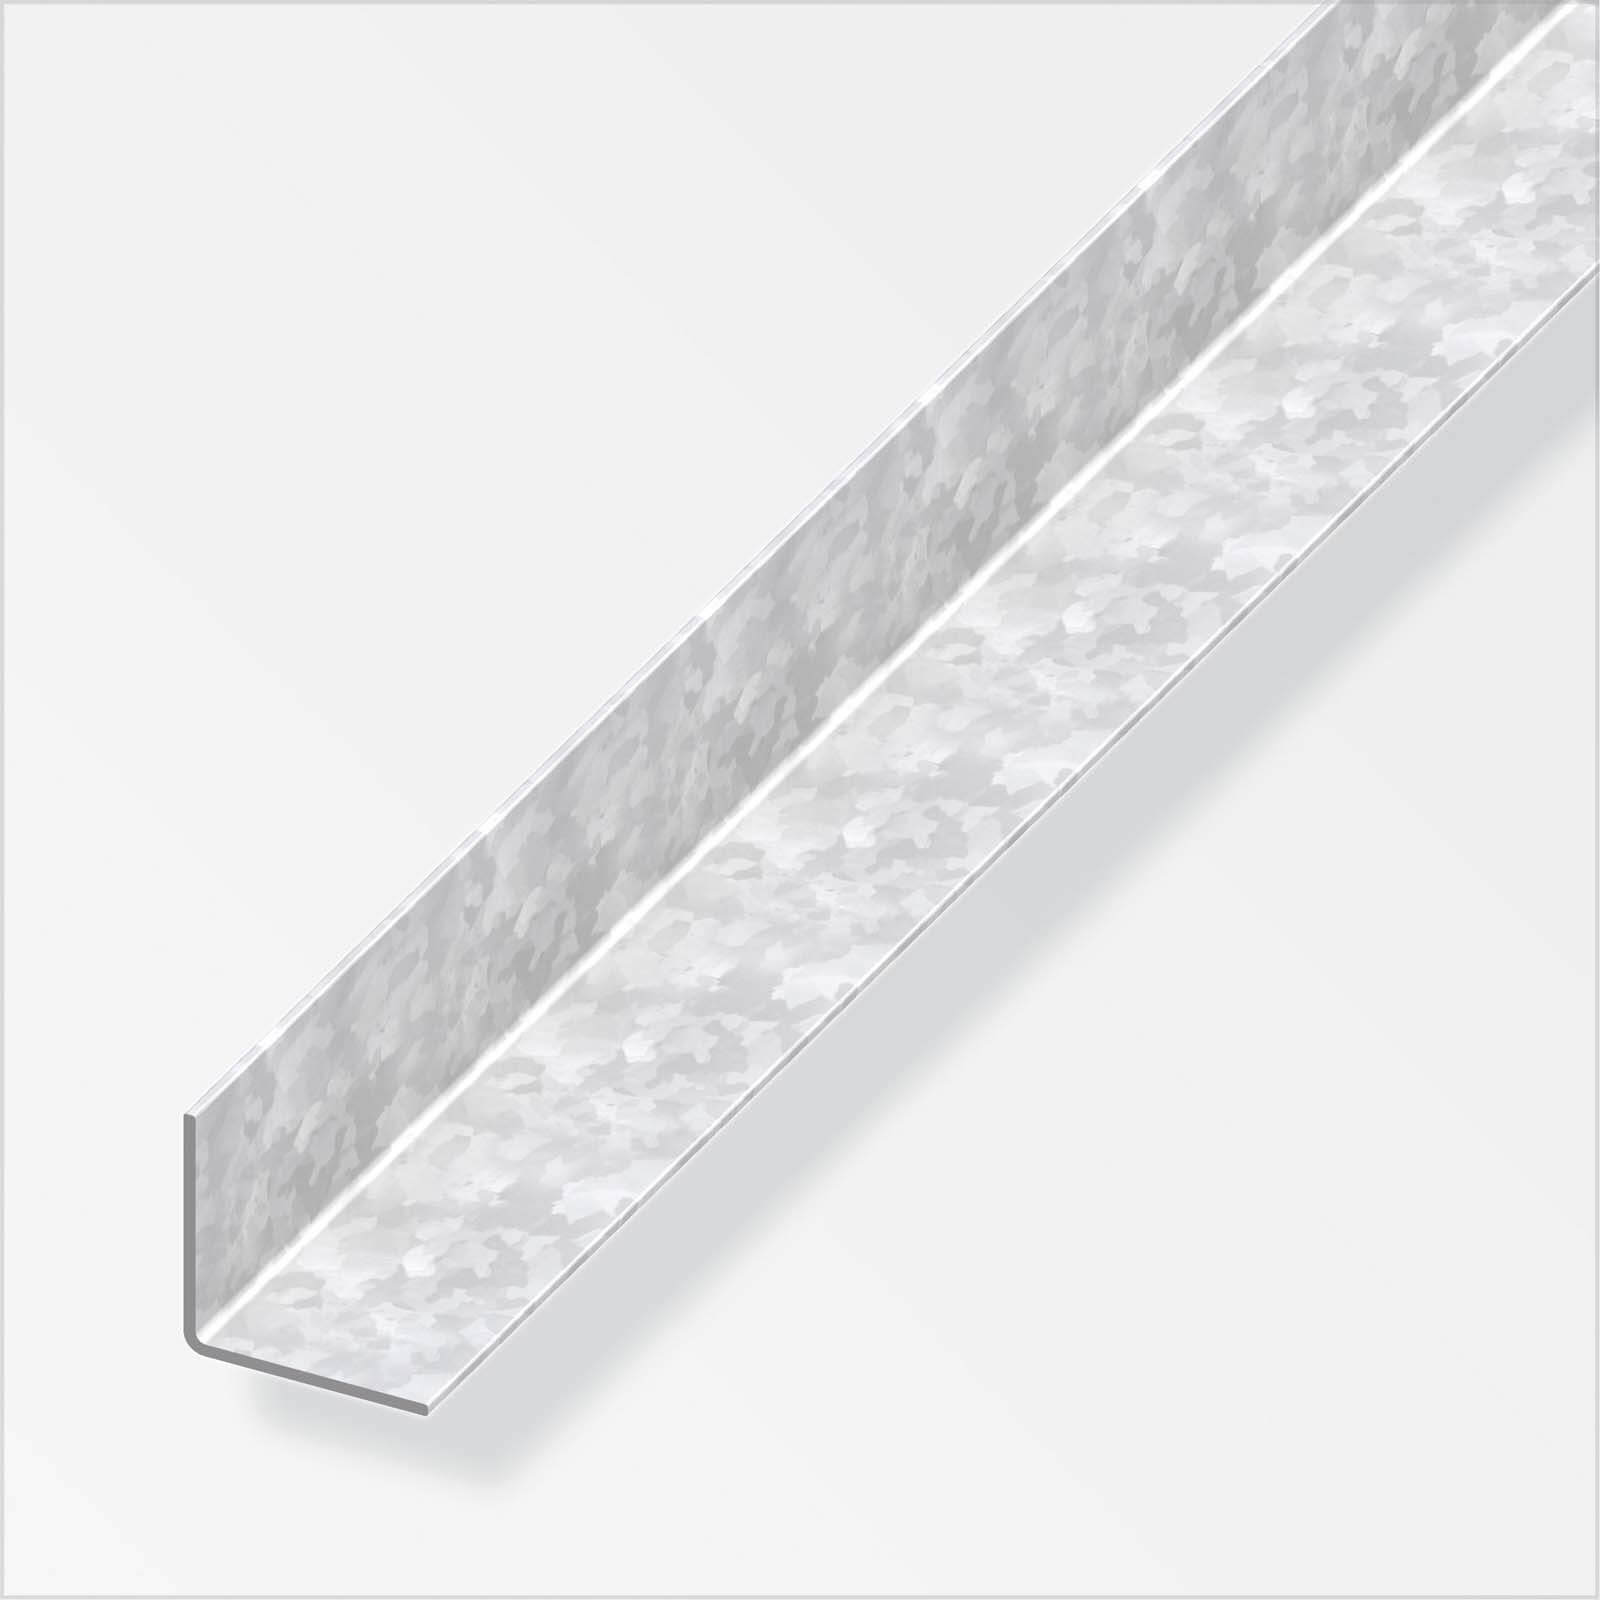 Photo of Galvanised Steel Equal Angle Profile - 1m X 23.5 X 23.5mm